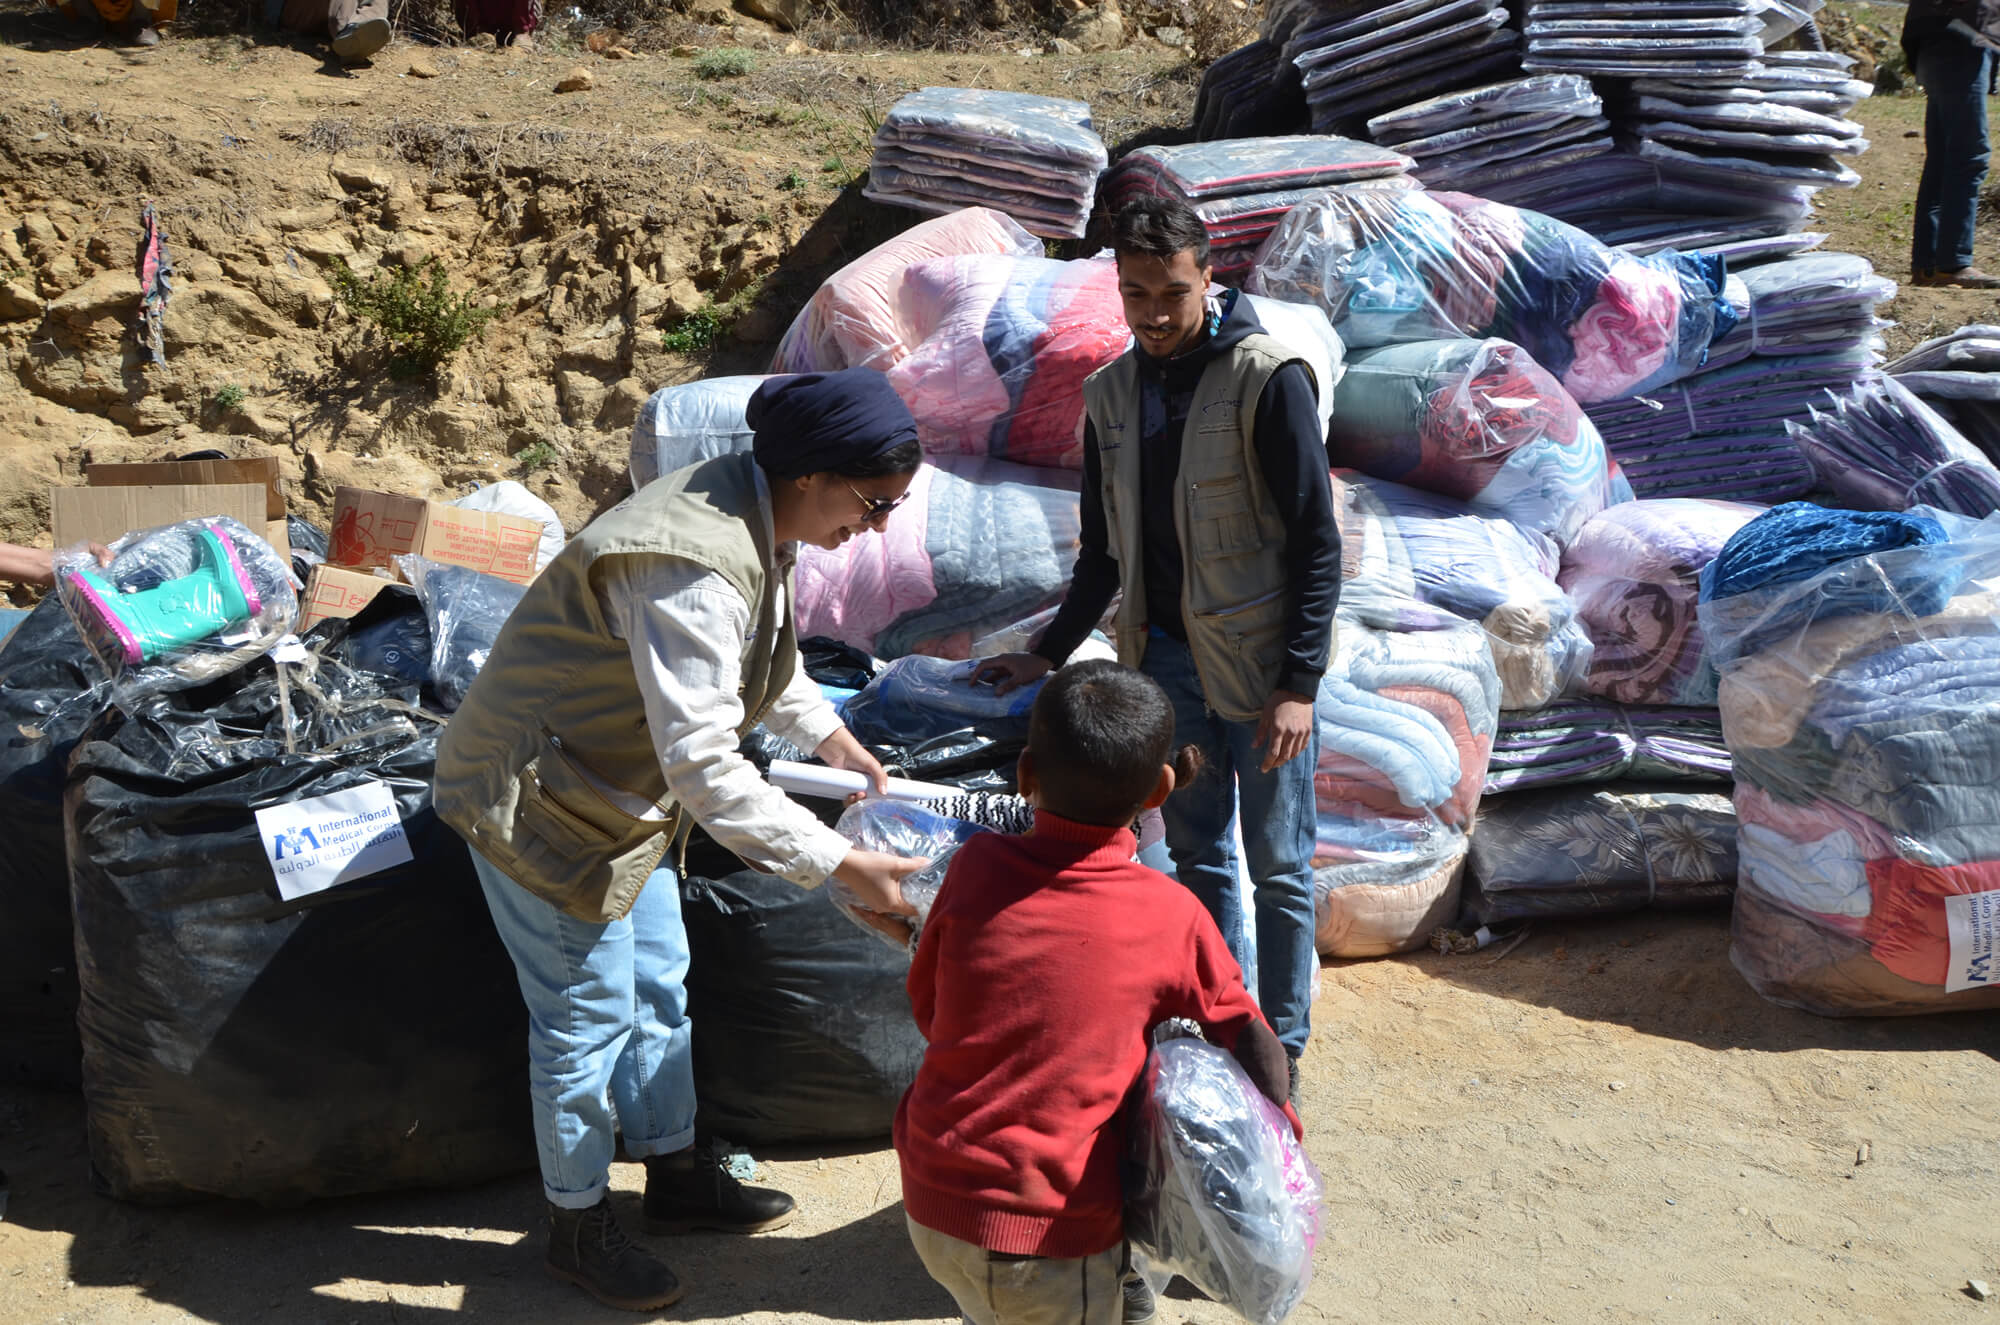 Our staff distributes winterization kits in Taroudant province, Morocco.